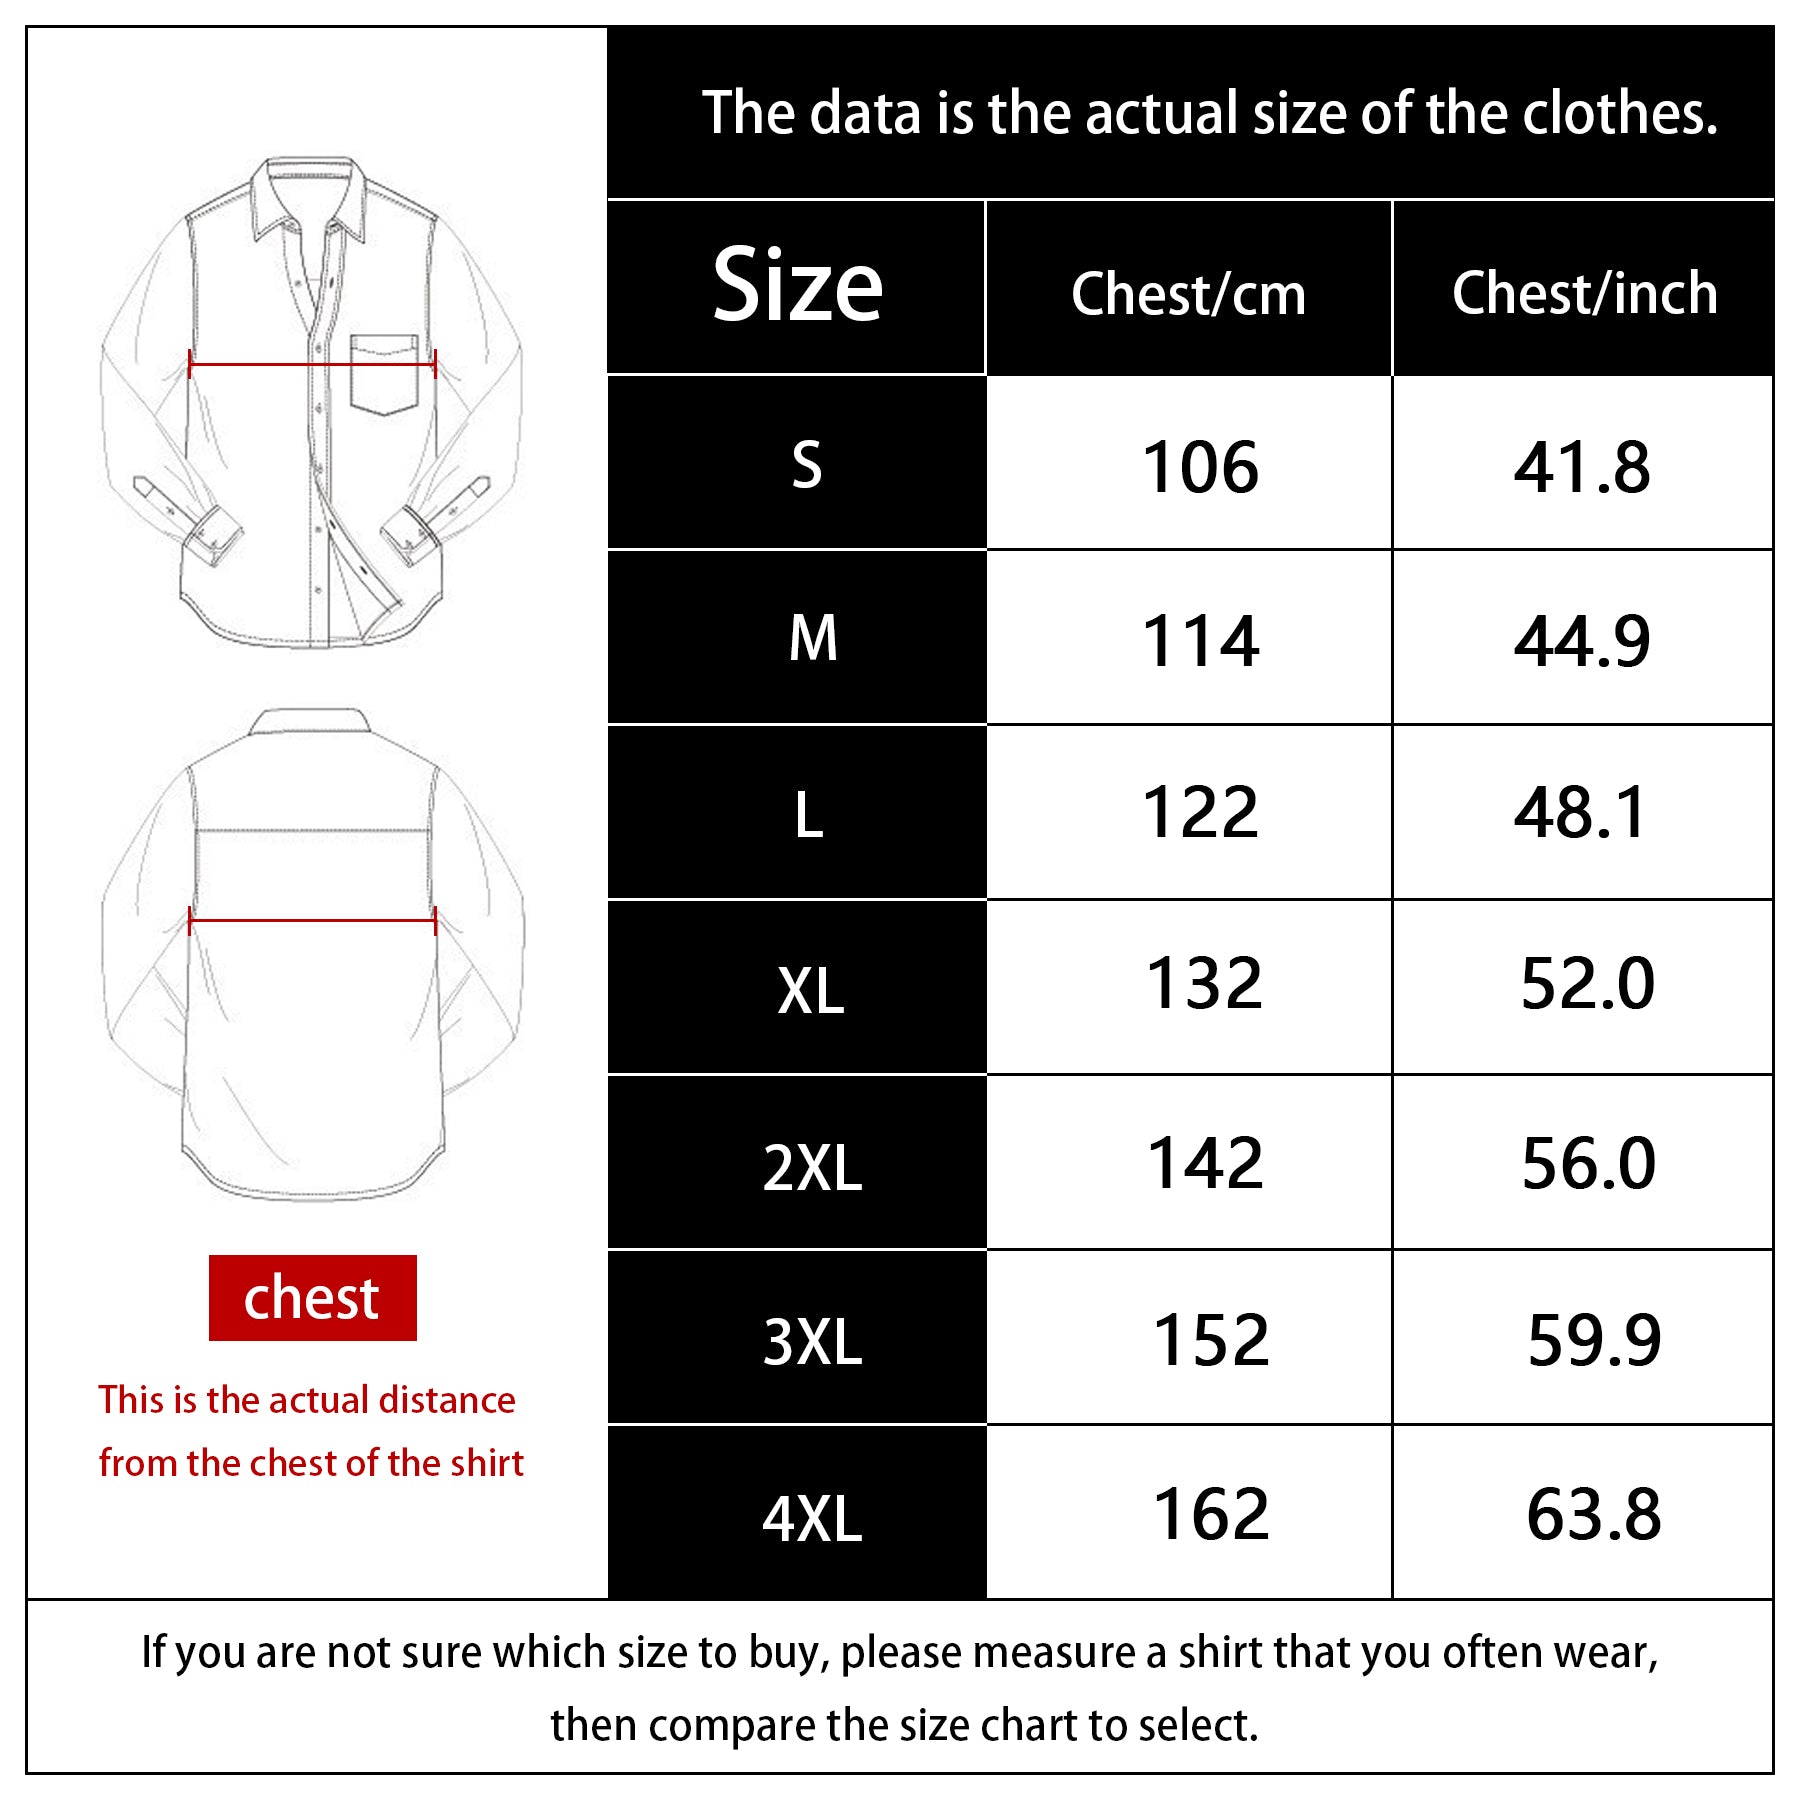 Mens Denim Shirts Button Down Short Sleeve Western Cotton Casual Work Jean Shirt #5505